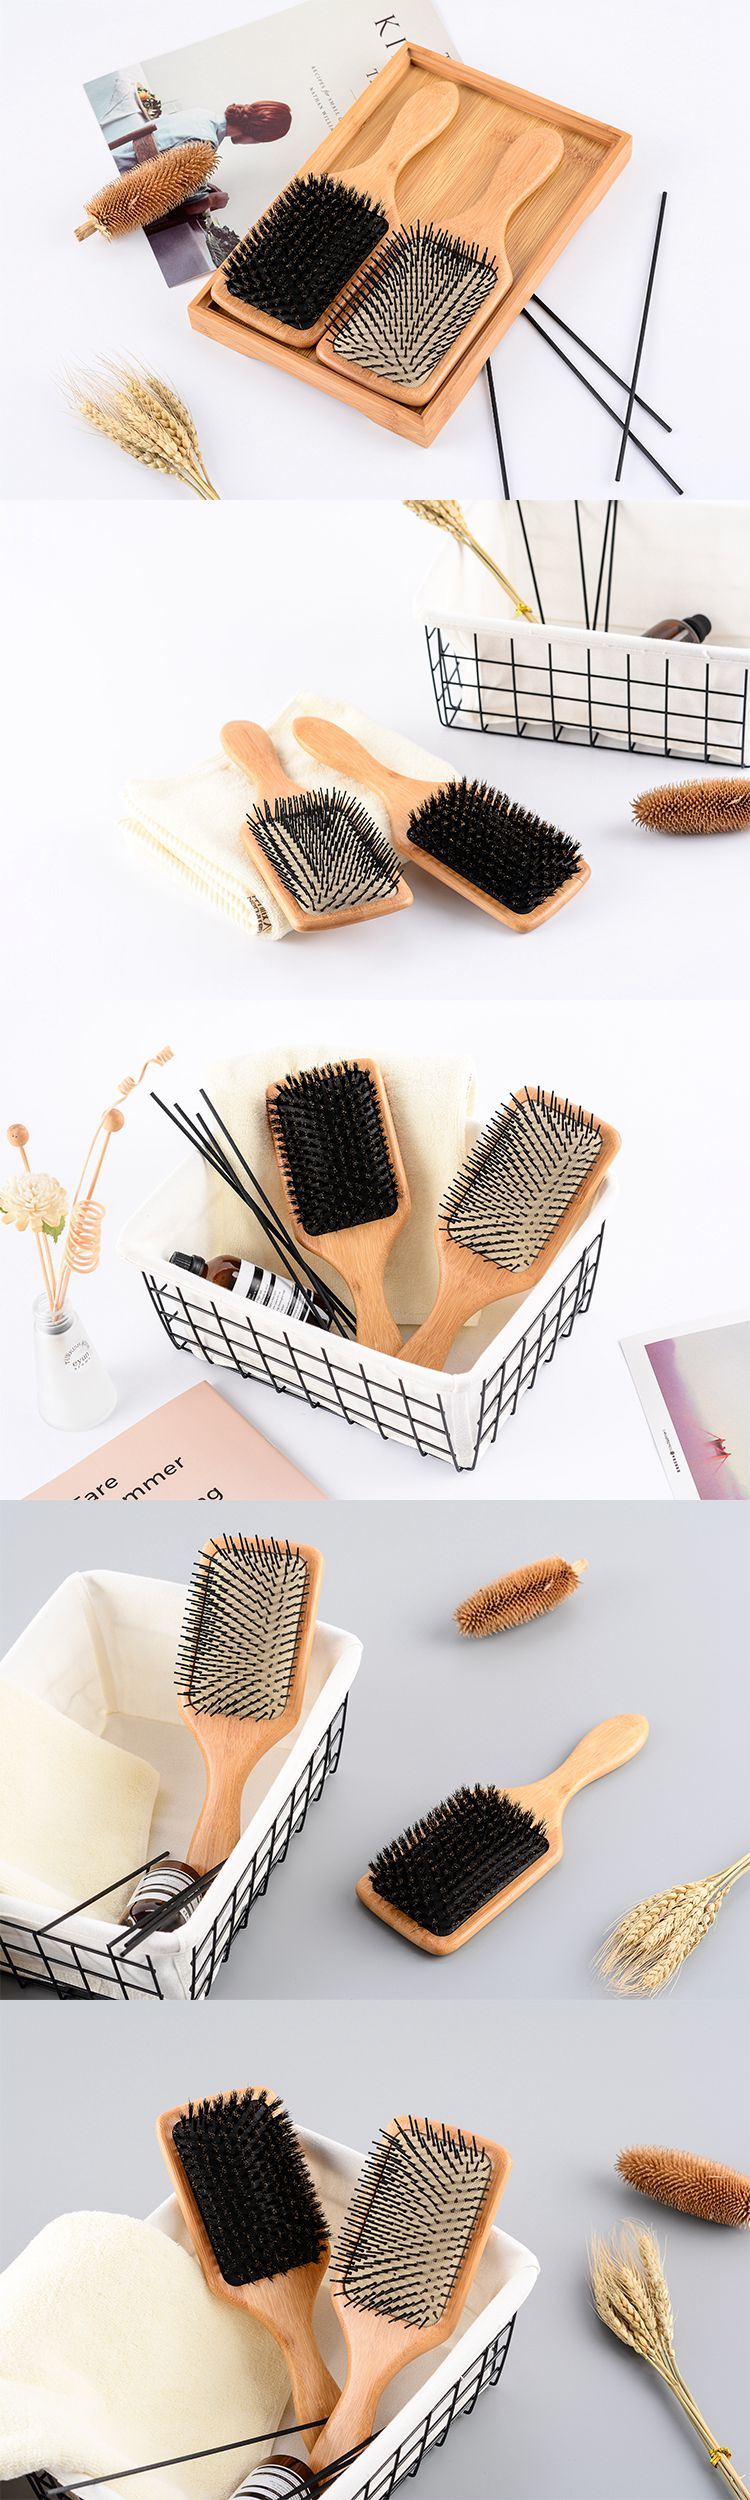 100% Biodegradable Wood Cushion Massage Brush Custom Paddle Bamboo Hair Brush